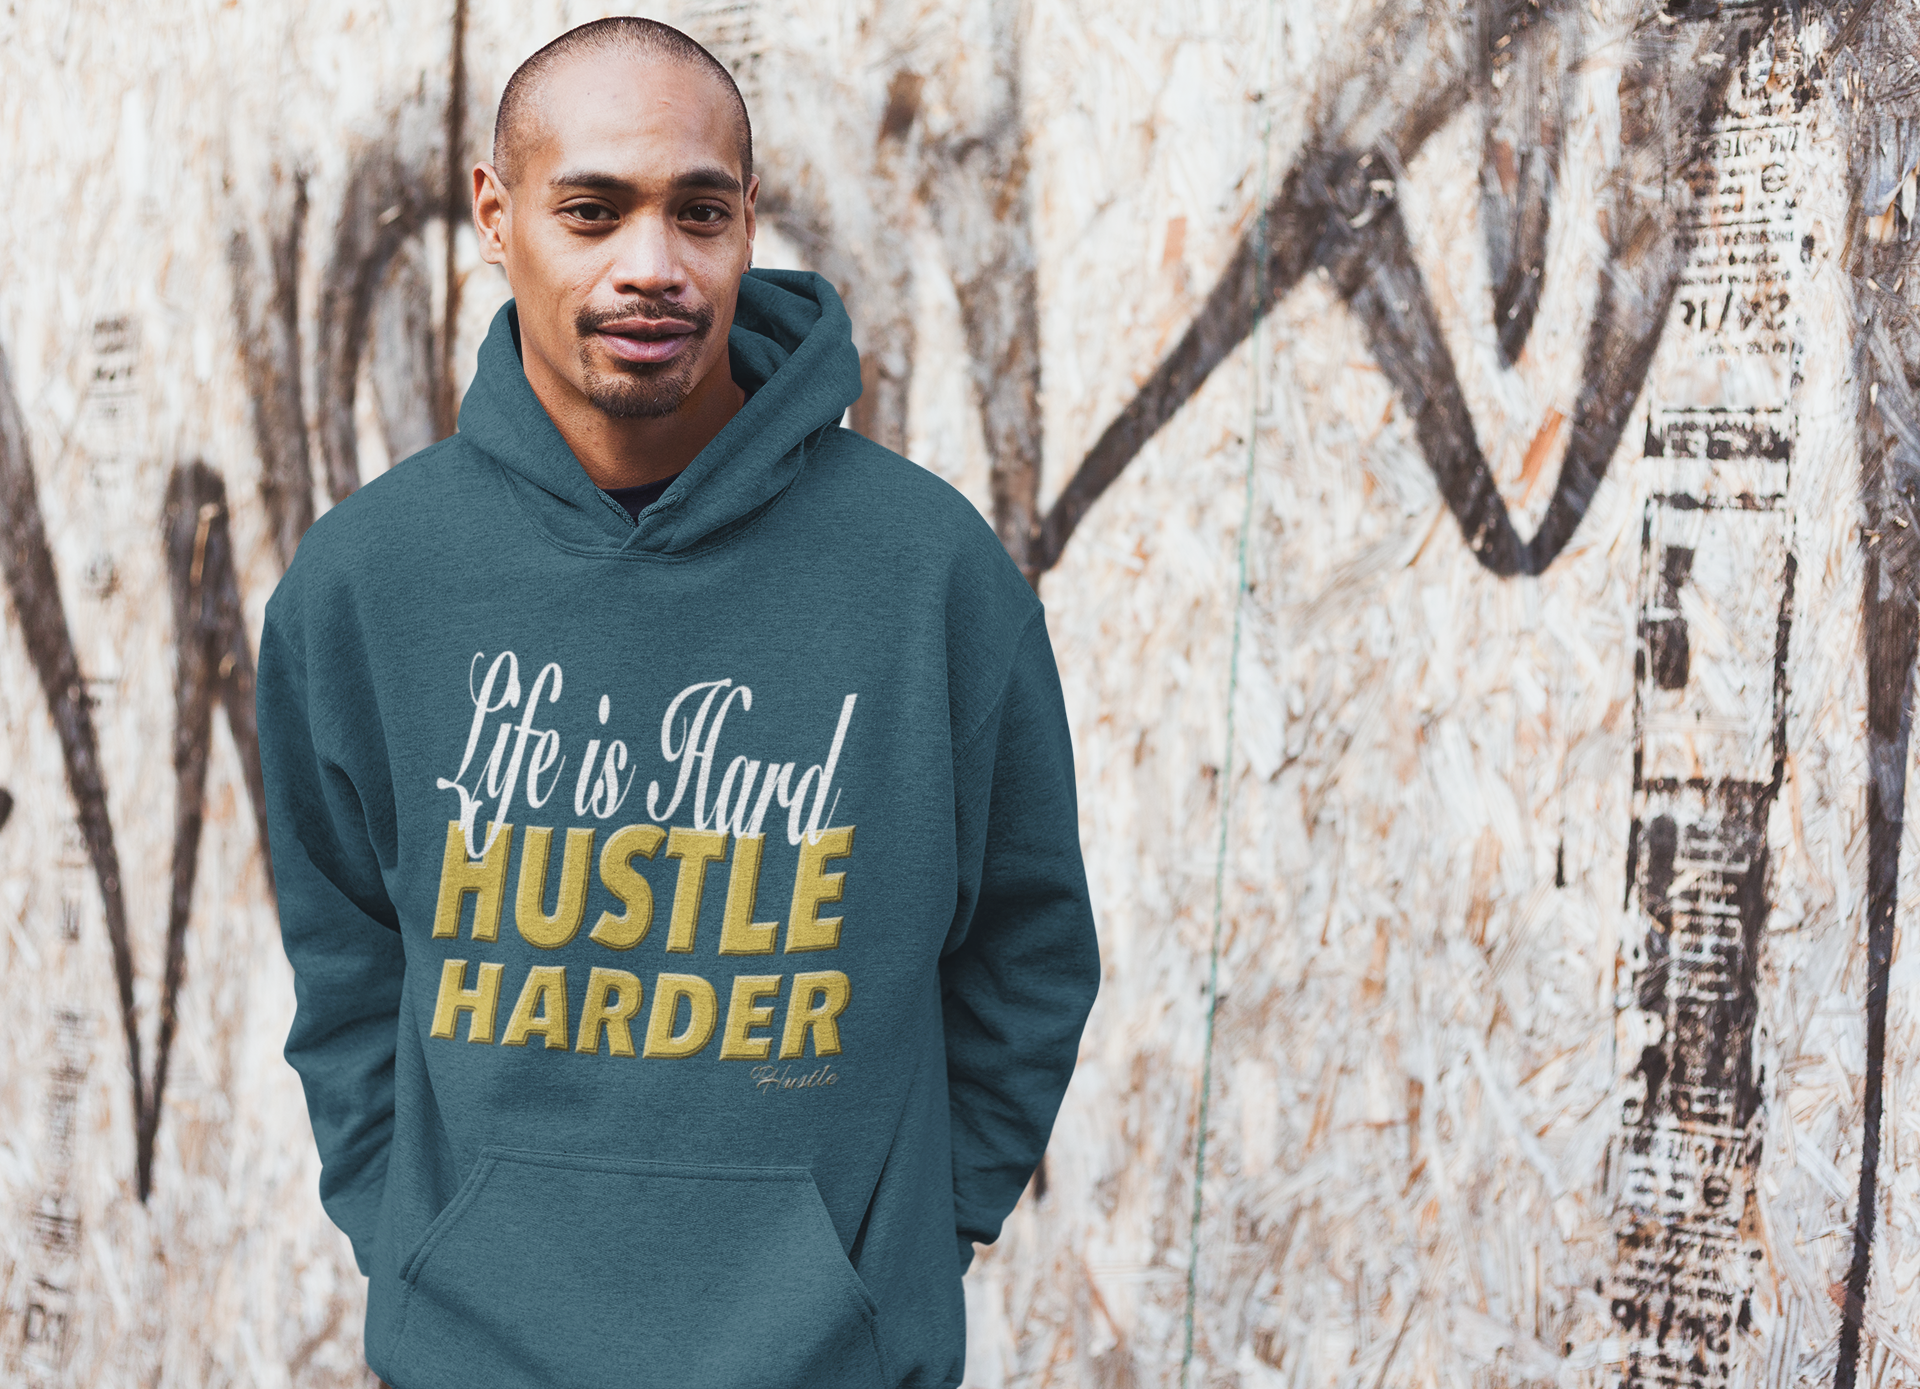 OD Hustle "Life Is Hard Hustle Harder" Hoodie Hooded Sweatshirt